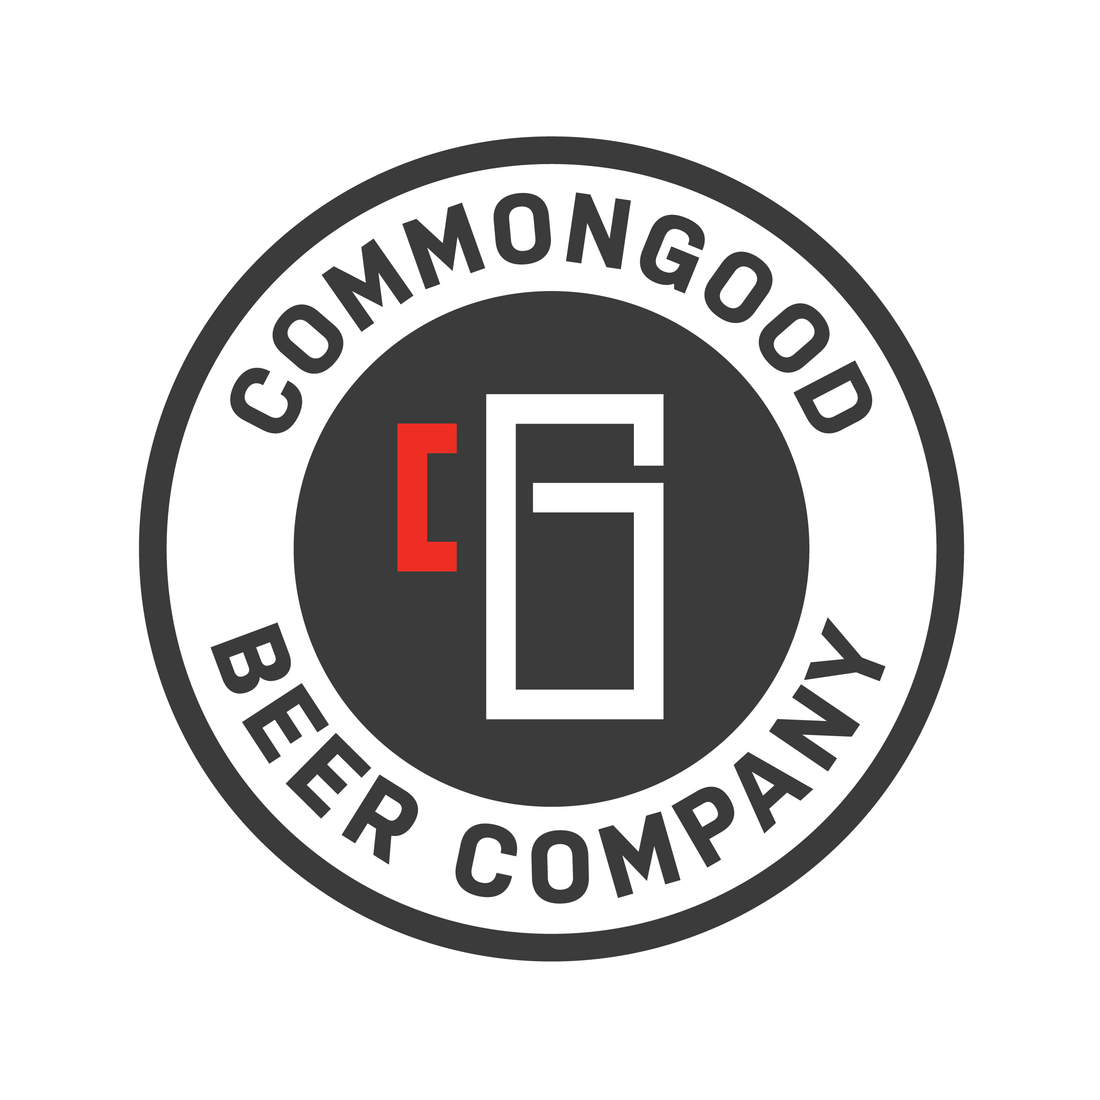 December 20:  Common Good Beer Company